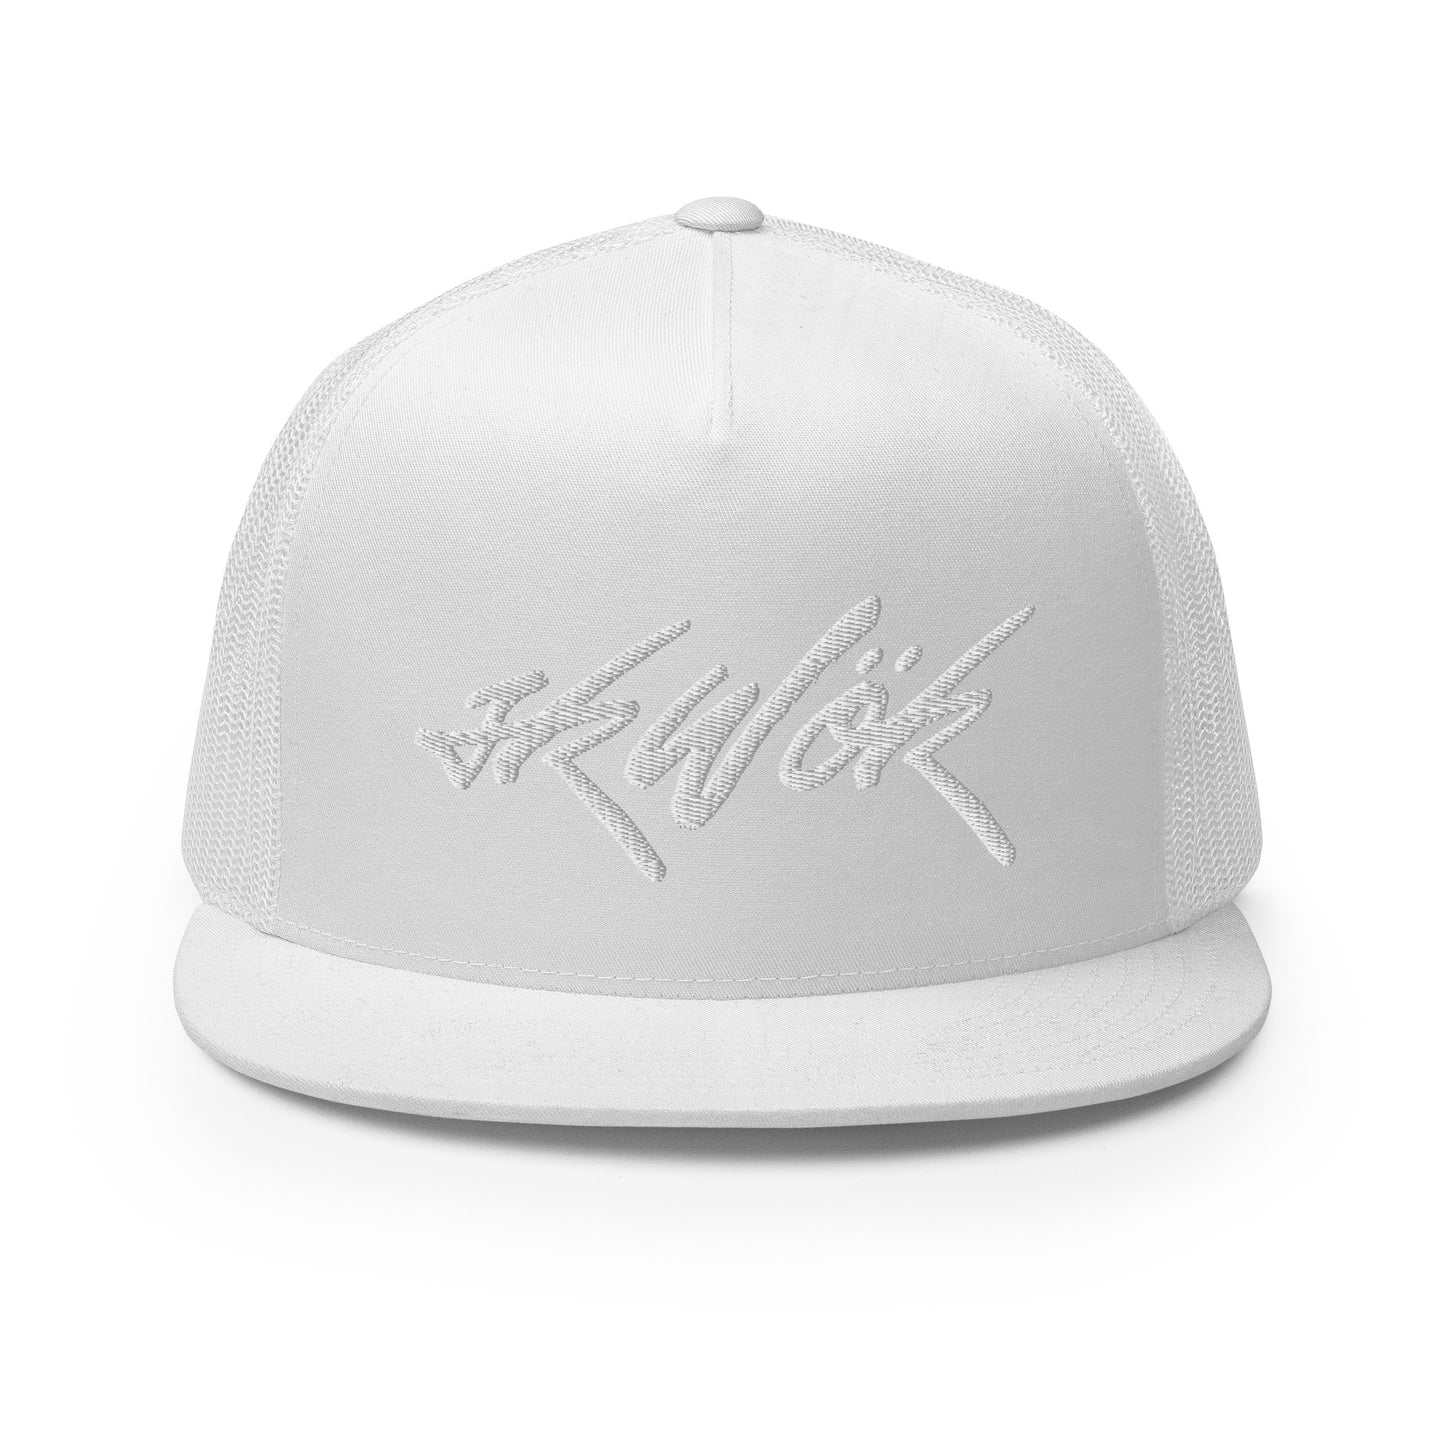 Skwok Brand / Hat / Trucker Cap / Tag Logo / 3d Puff / White